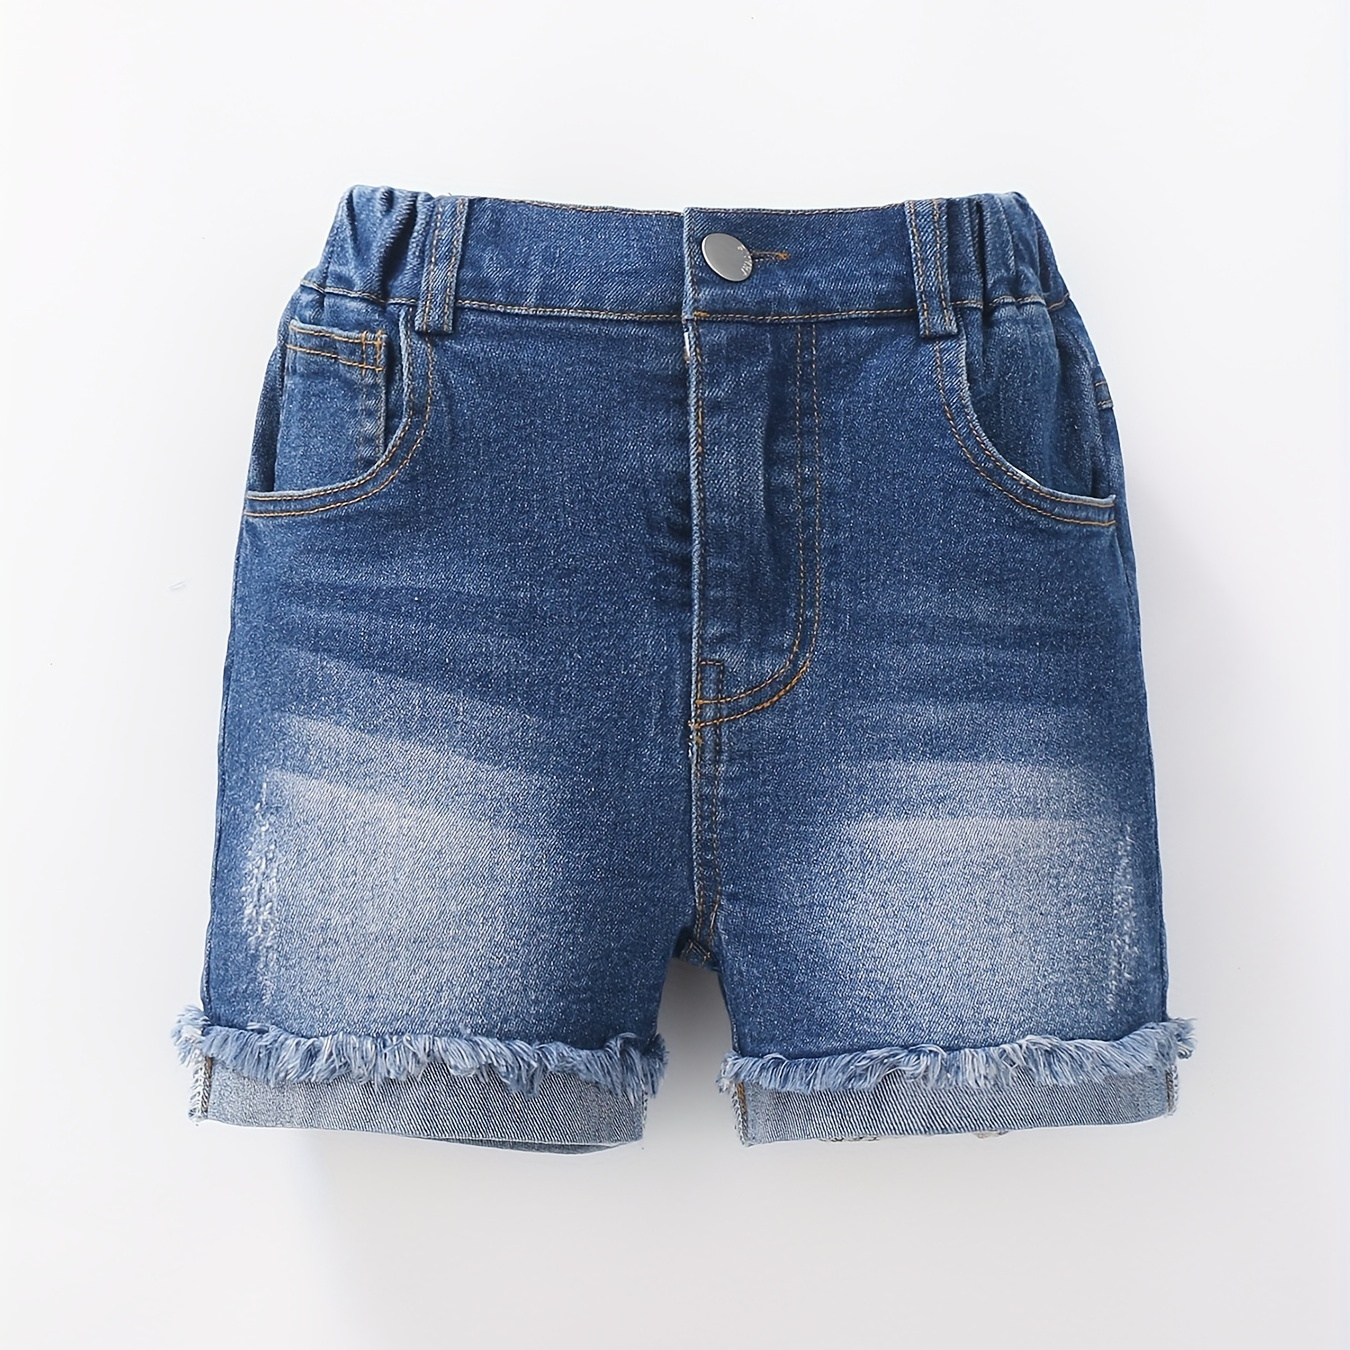 

Teen Girls Casual Tight Fit Jeans Shorts Elastic Waist Roll-up Hem Denim Shorts